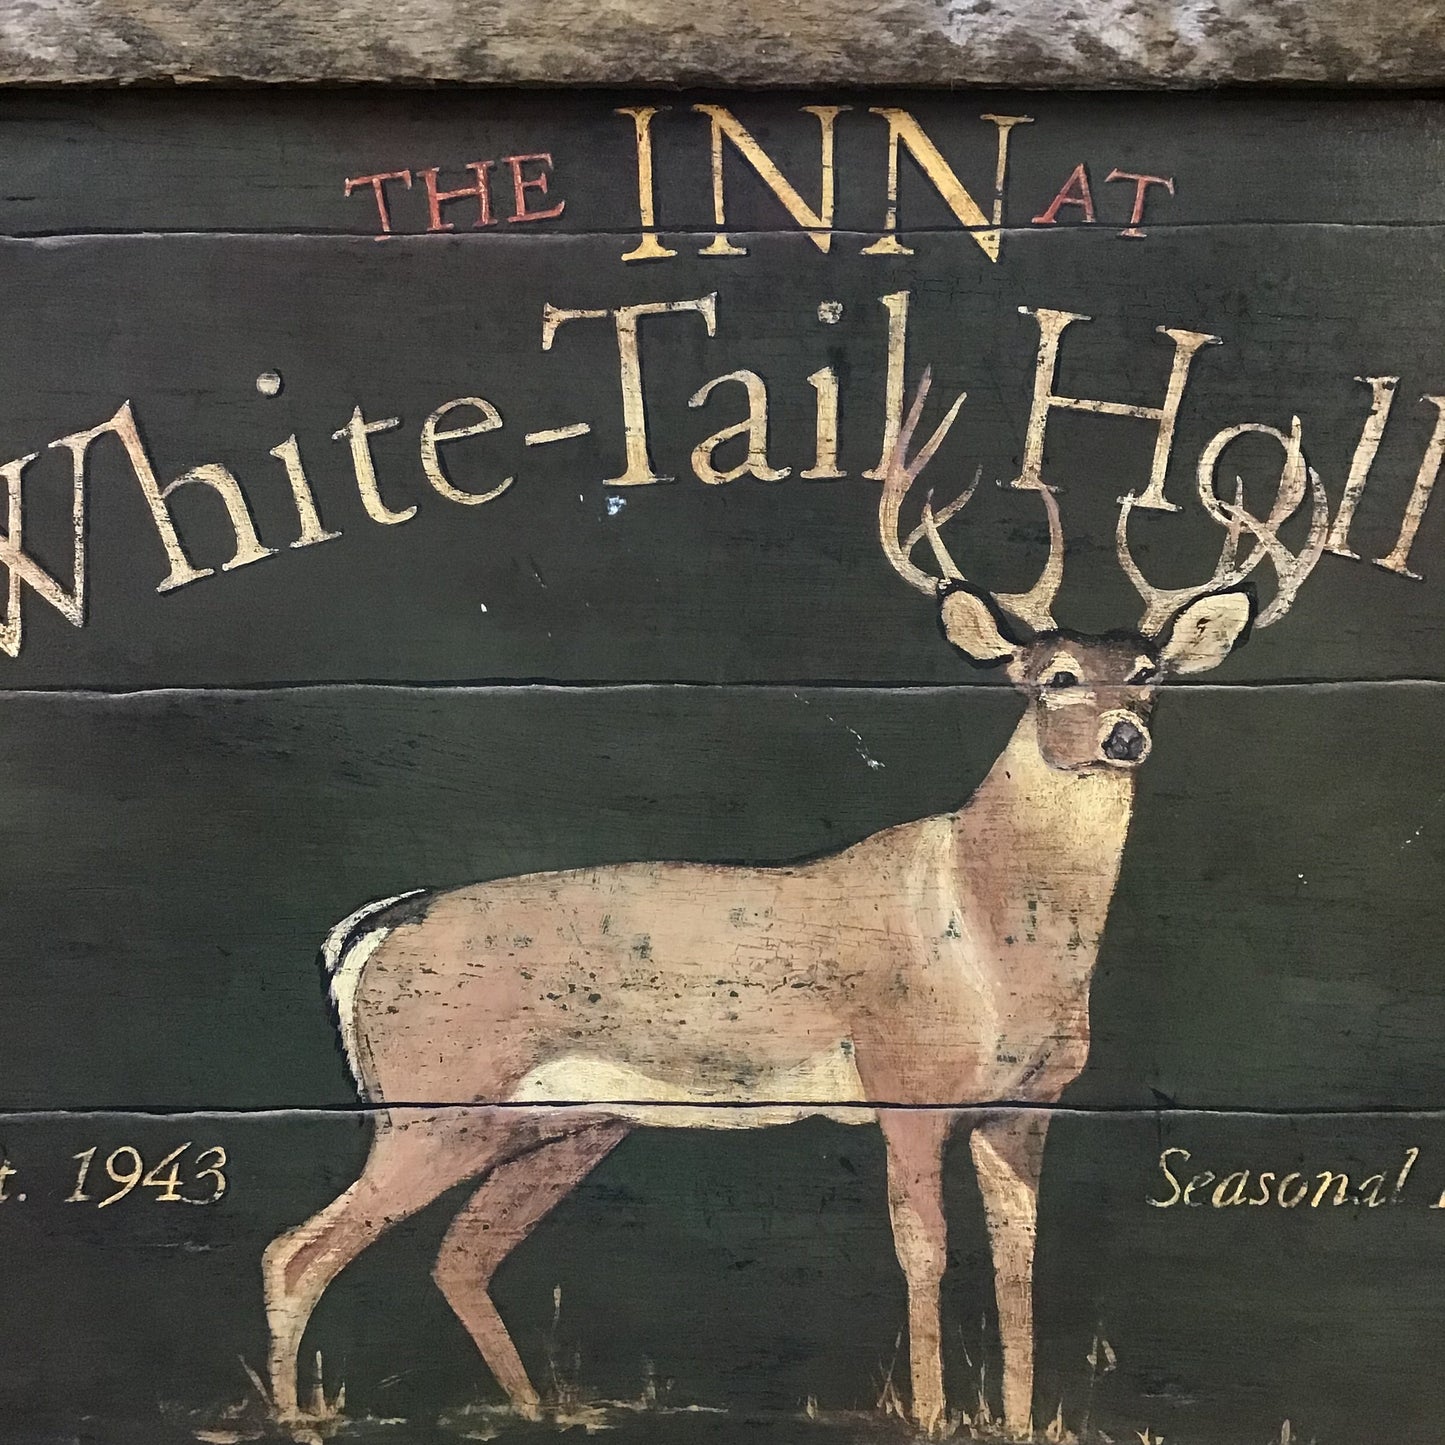 21.75" White Tail Hollow Deer Wall Art